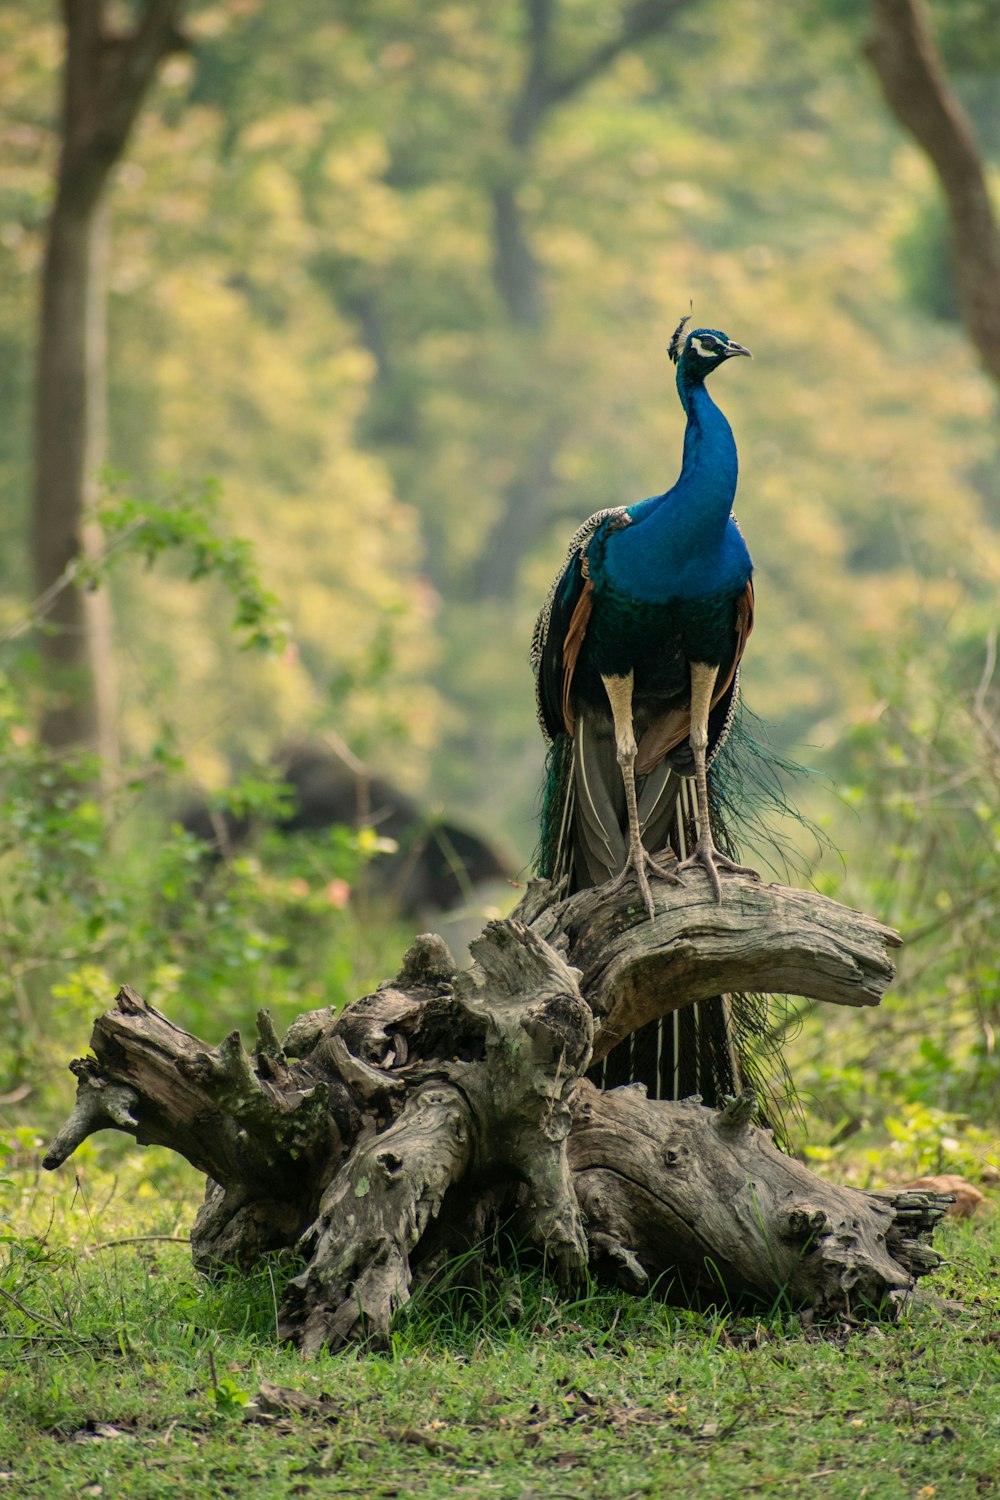 a peacock on a log